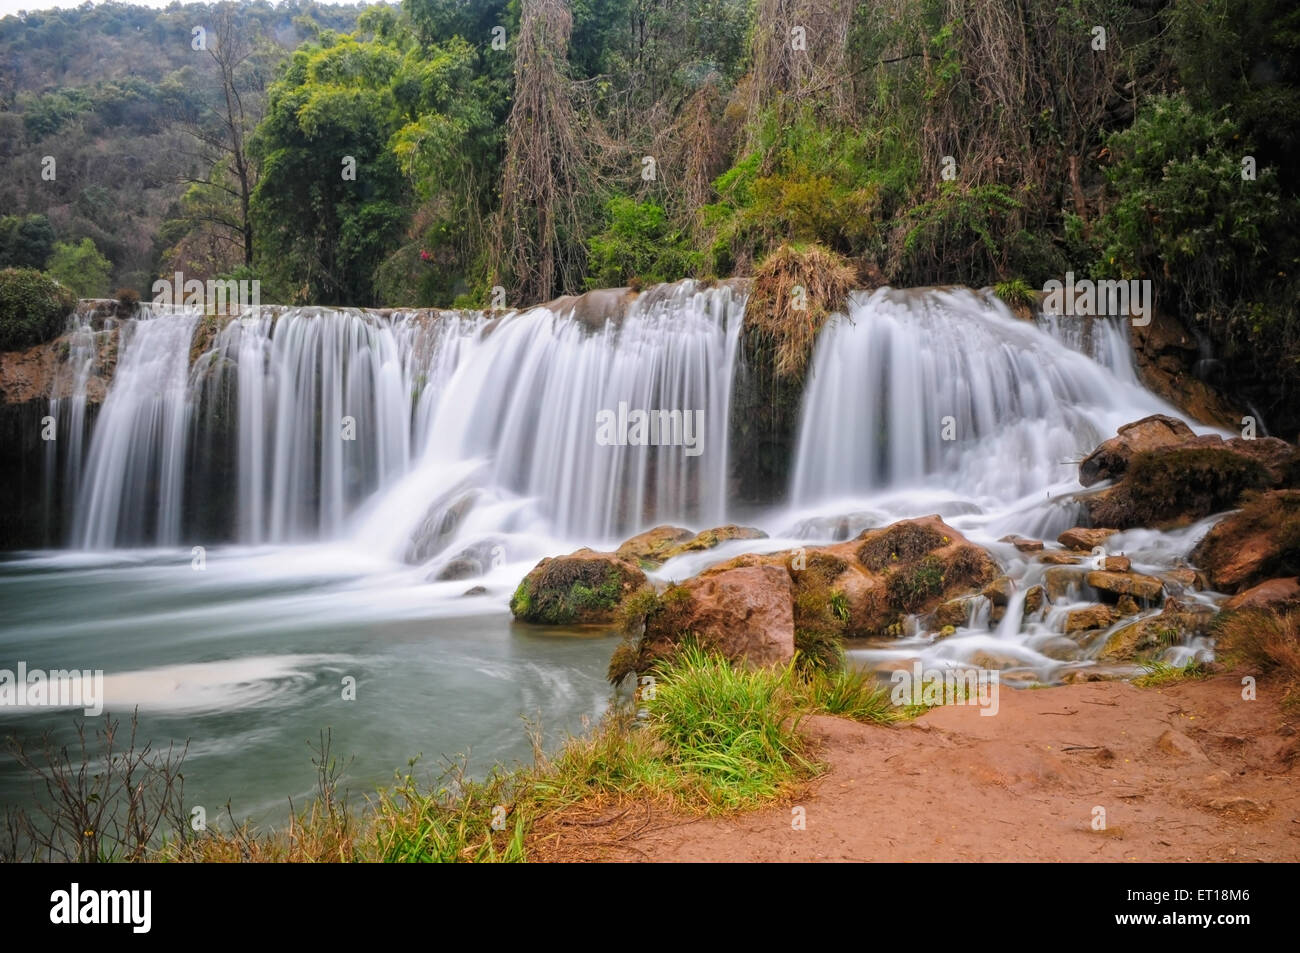 Jiulong waterfall in Luoping, China Stock Photo